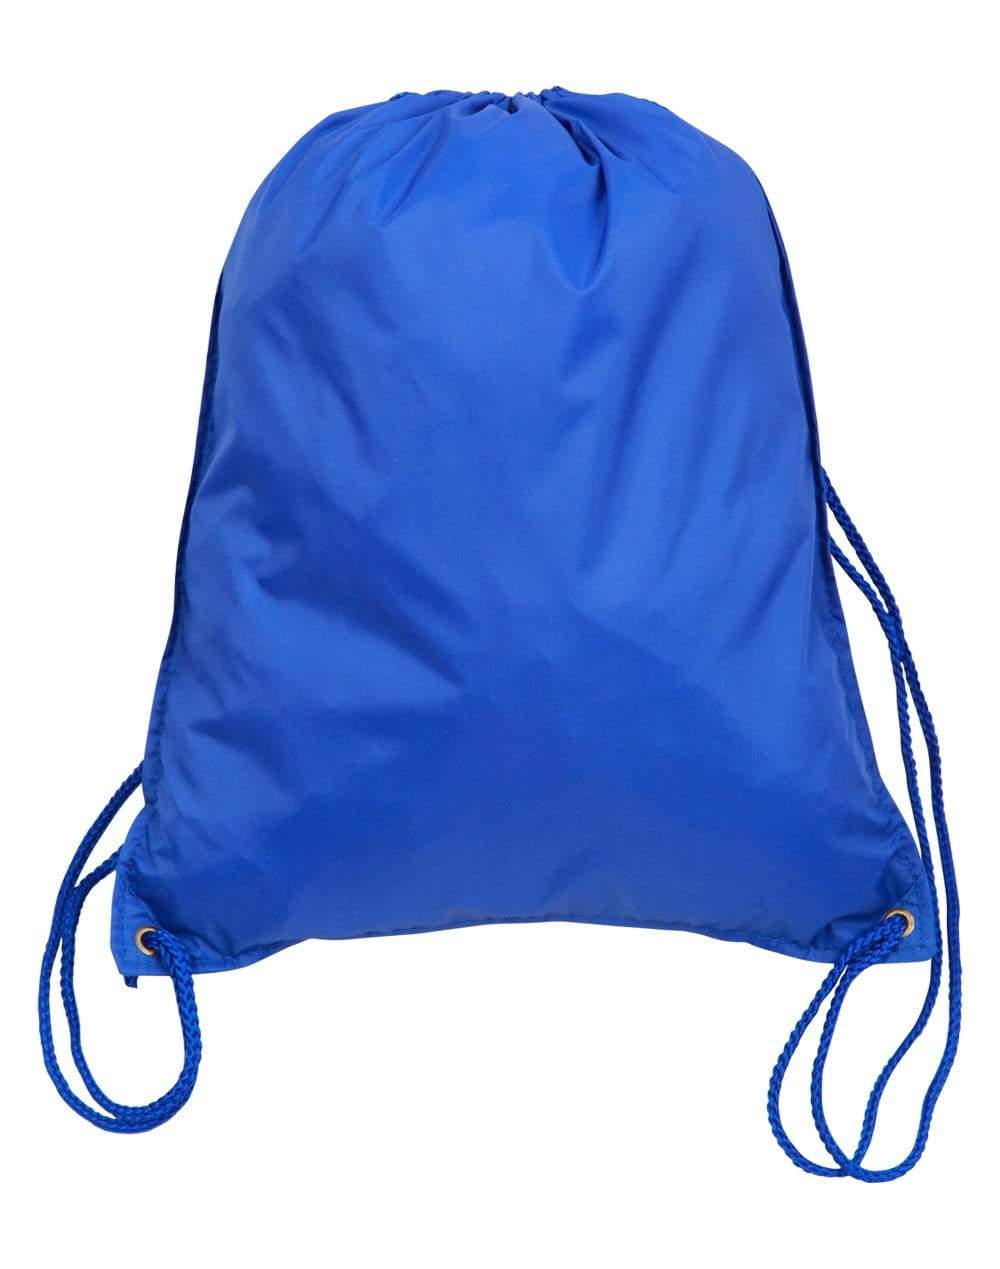 Swim Backpack B4112 Active Wear Winning Spirit Royal (w)39cm x (h)46.5cm 